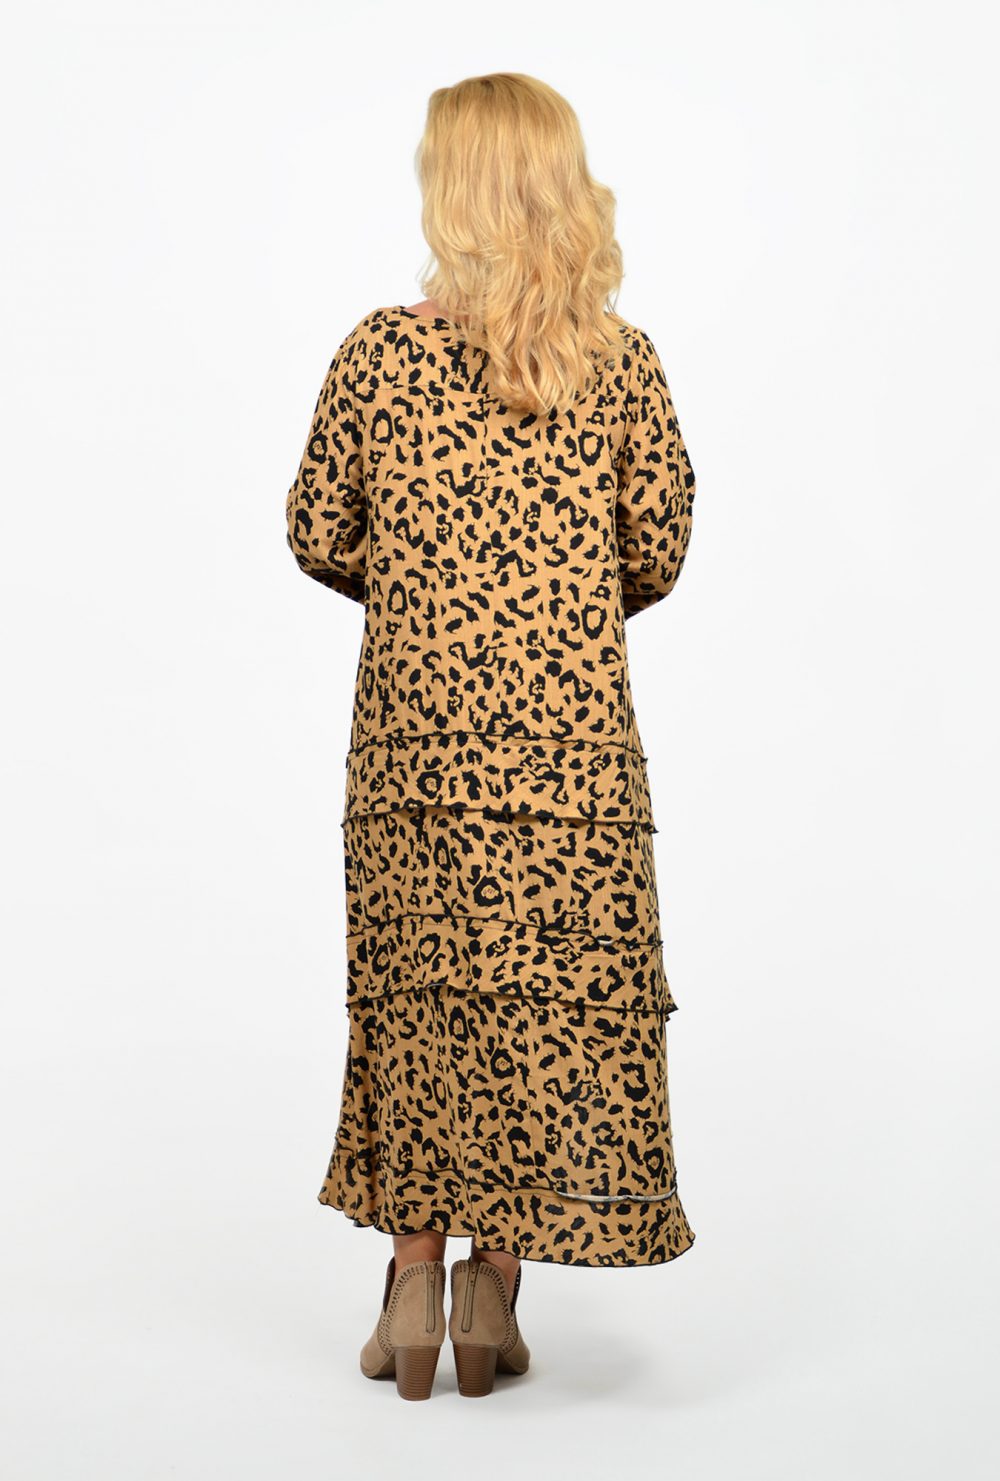 Back of dress, animal print, maxi dress worn by blond woman.